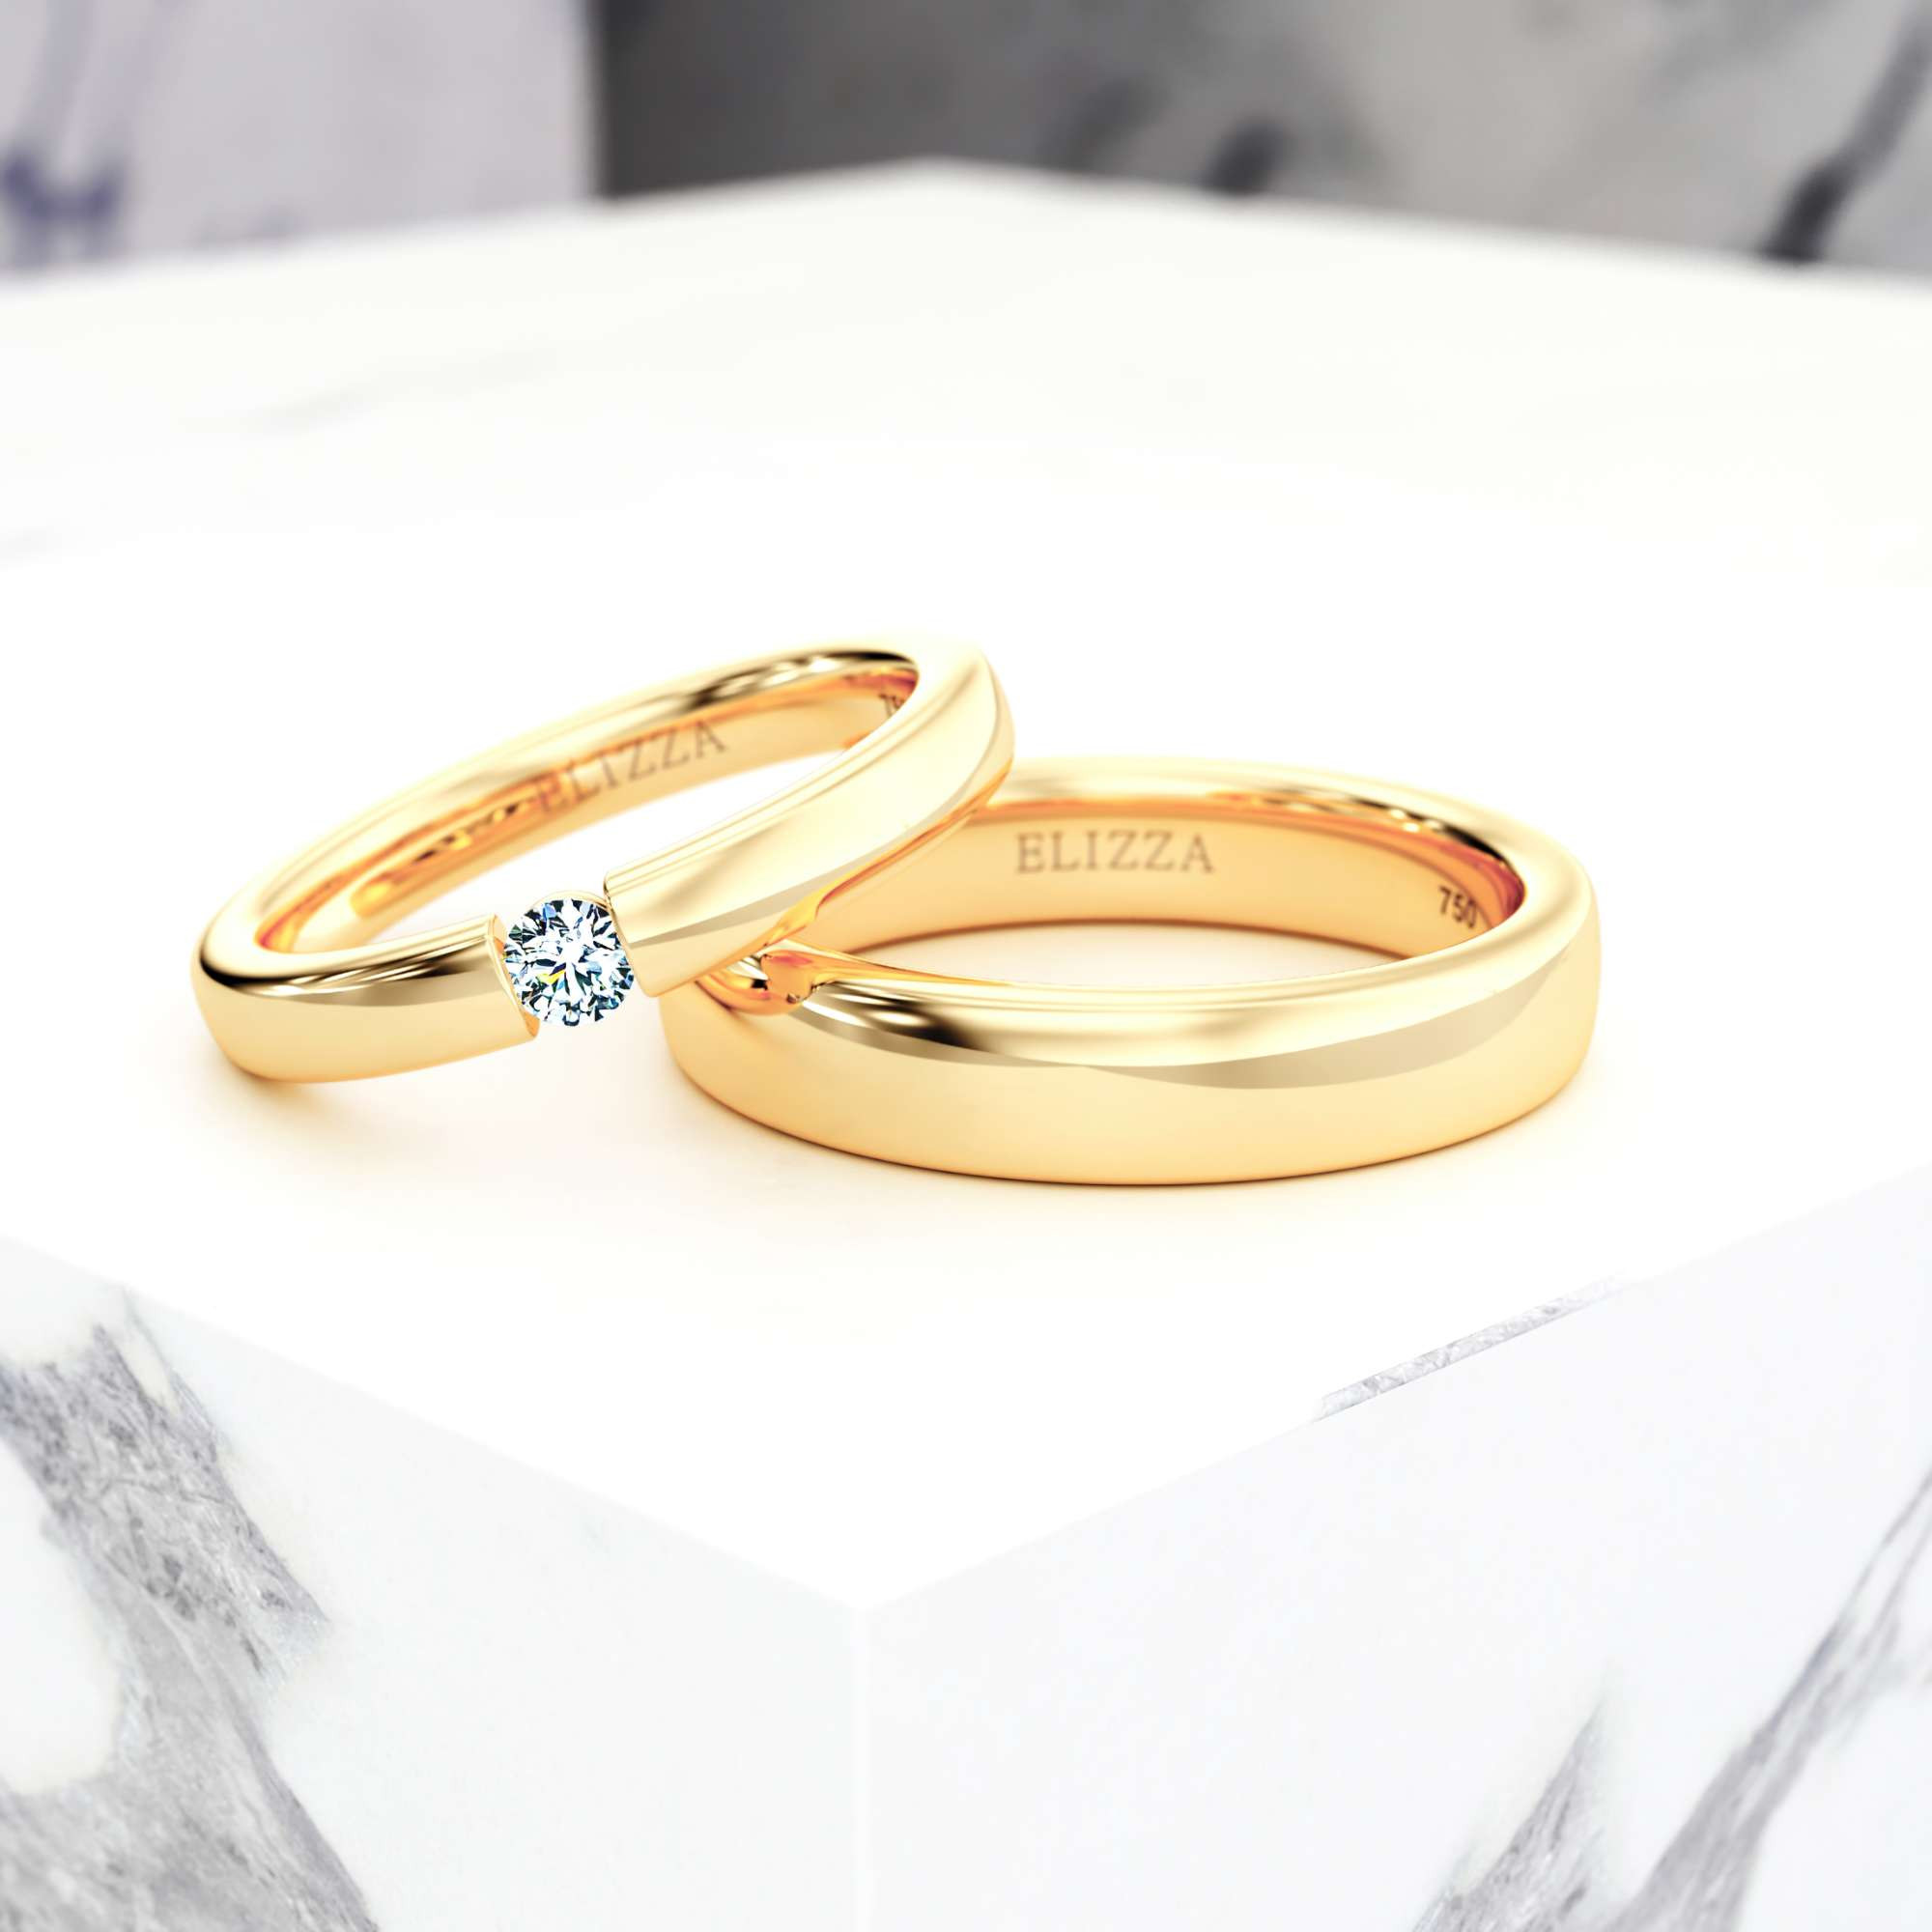 Wedding Rings Hands Lovers Husband Wife Stock Photo 569905516 | Shutterstock